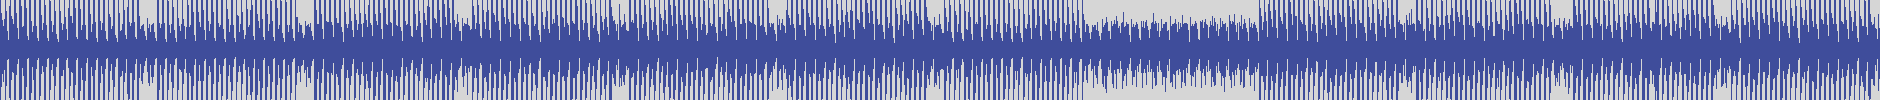 nf_boyz_records [NFY017] Lappo Dj - Lenta [Dark Bass Mix] audio wave form